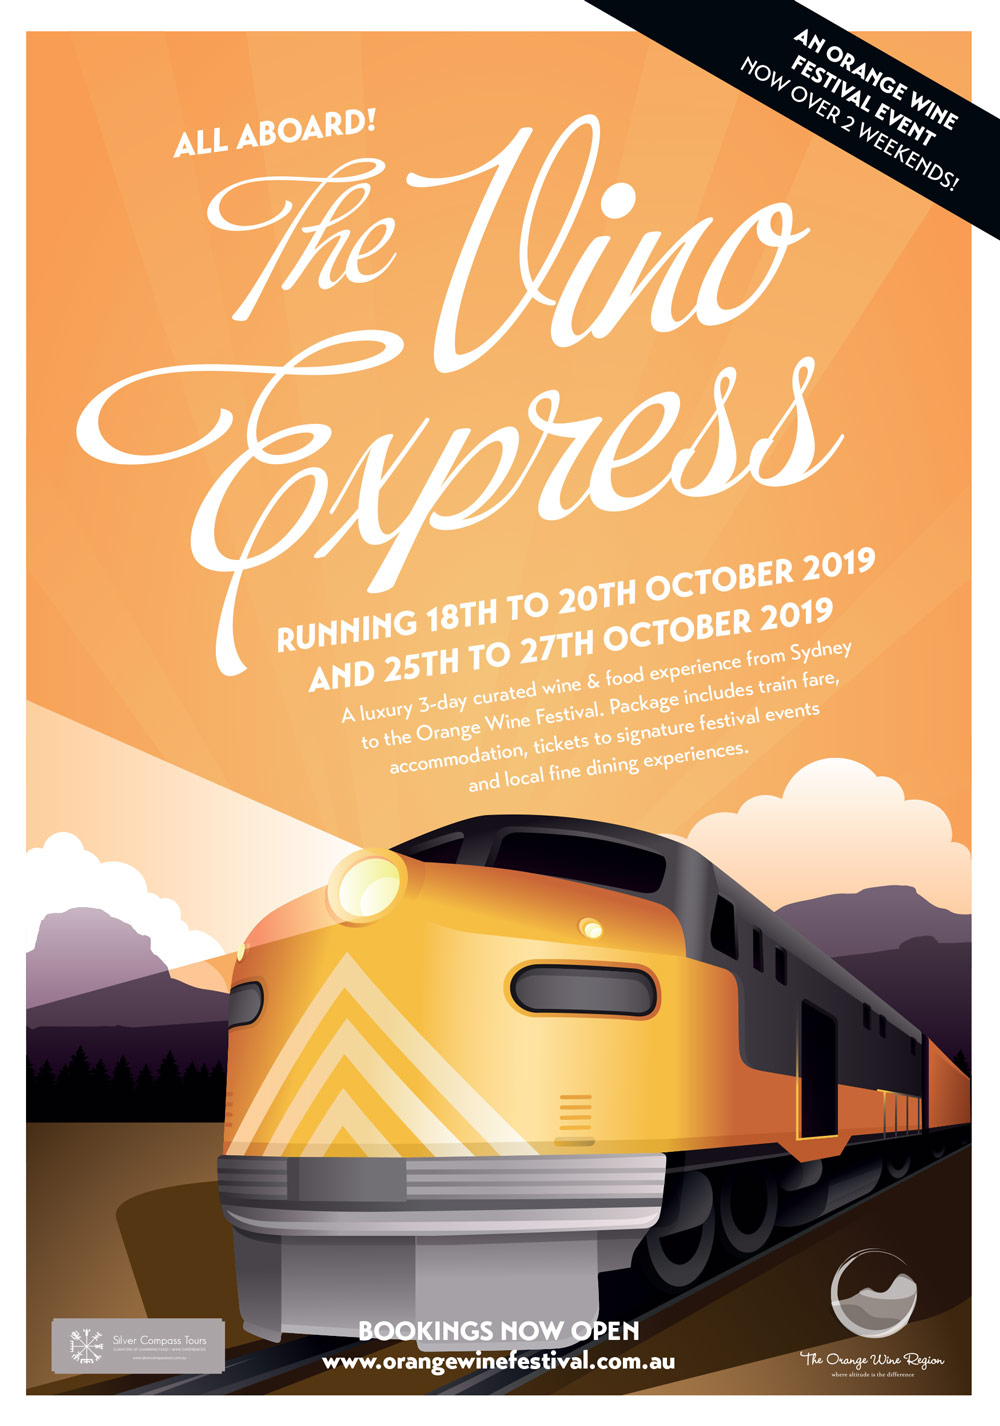 The Vino Express